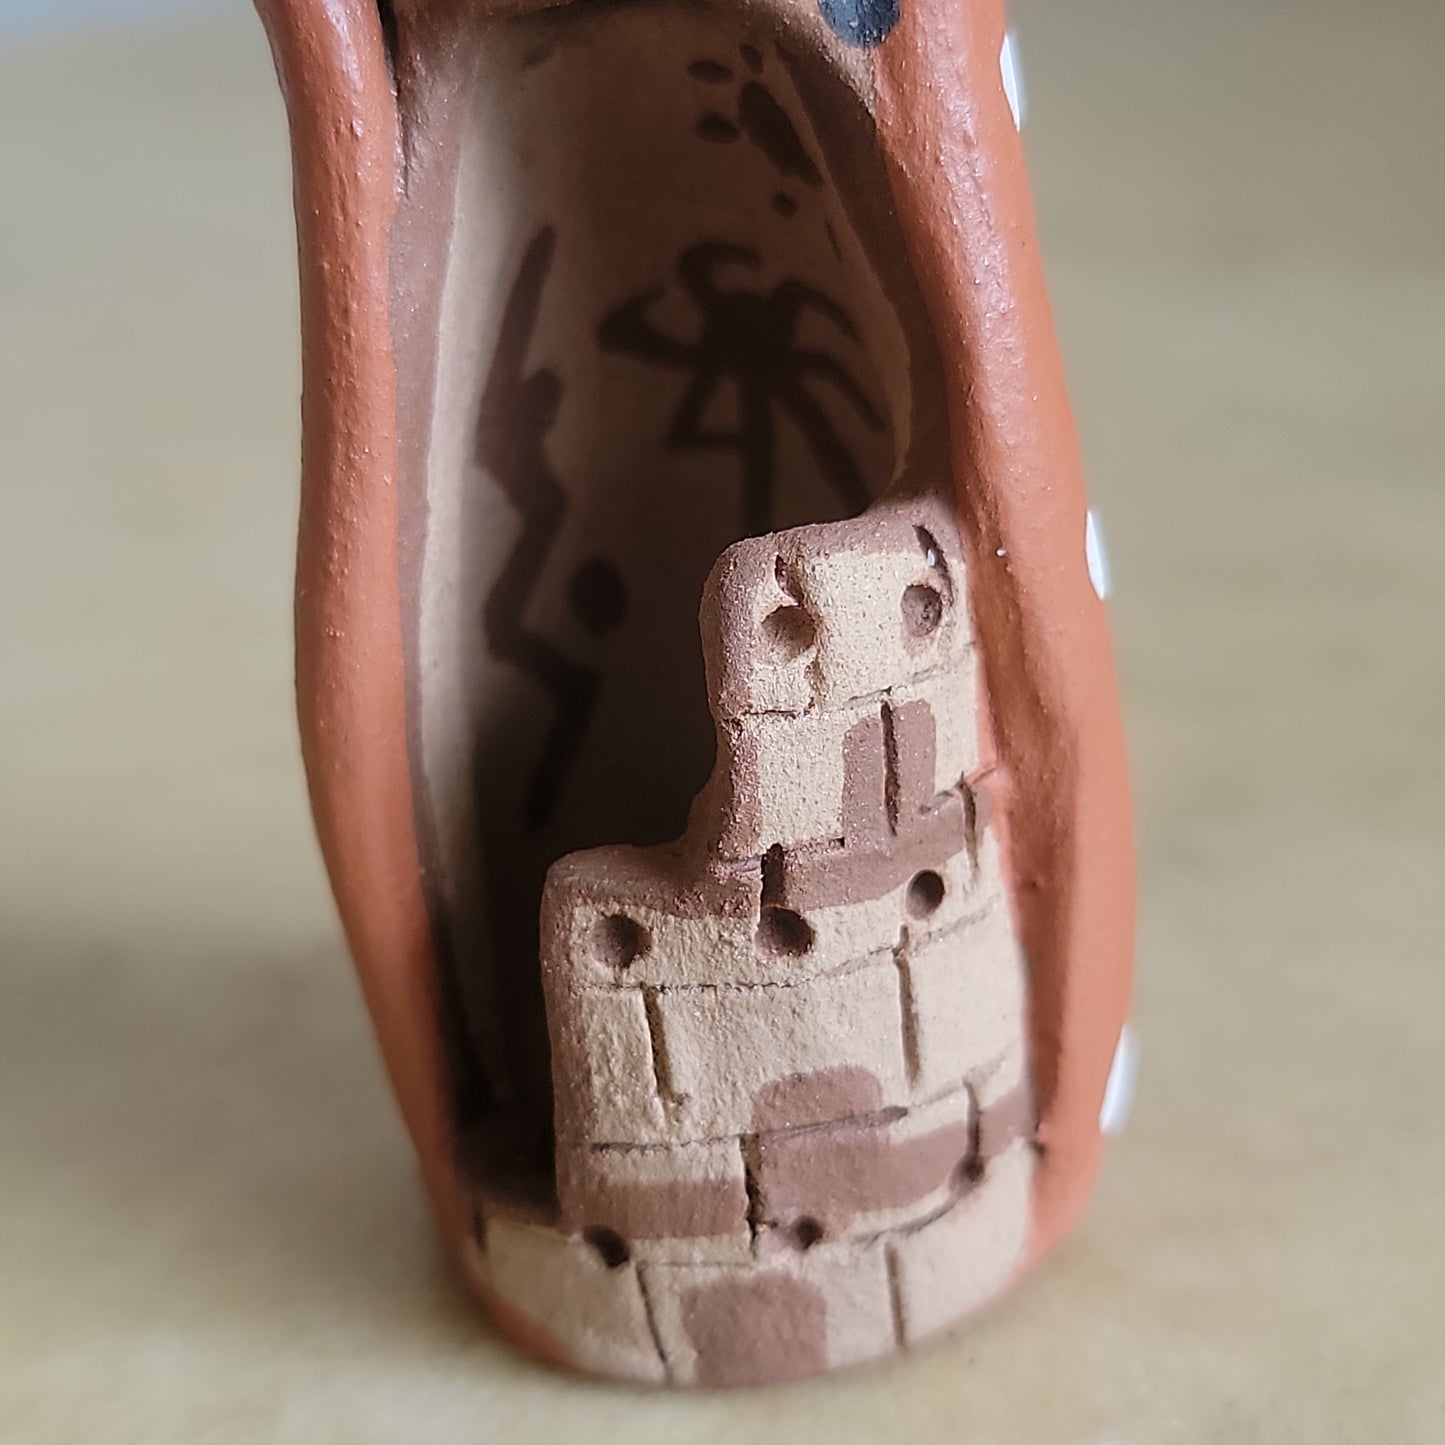 Felicia Fragua Unique Jemez Maiden Figurine W/ Pueblo  Indian Pottery